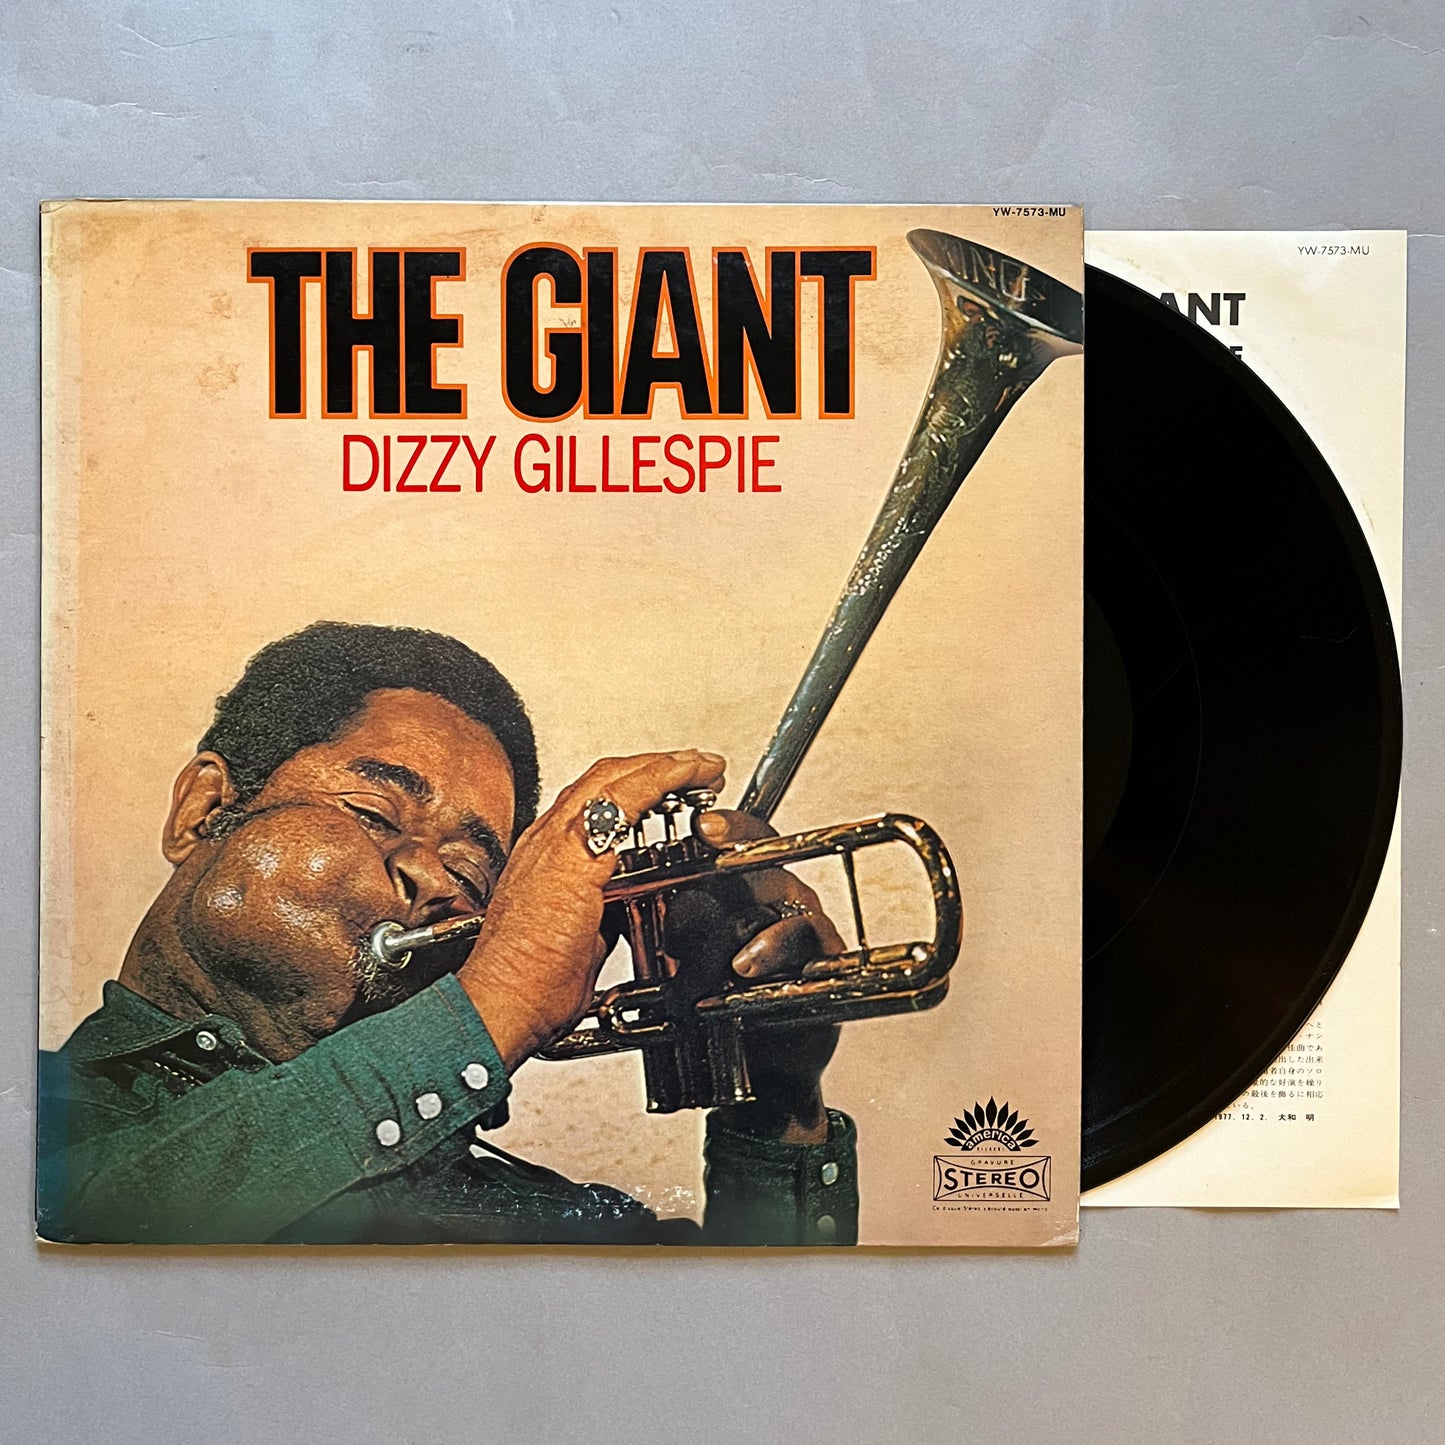 DIZZY GILLESPIE "THE GIANT" 일본판